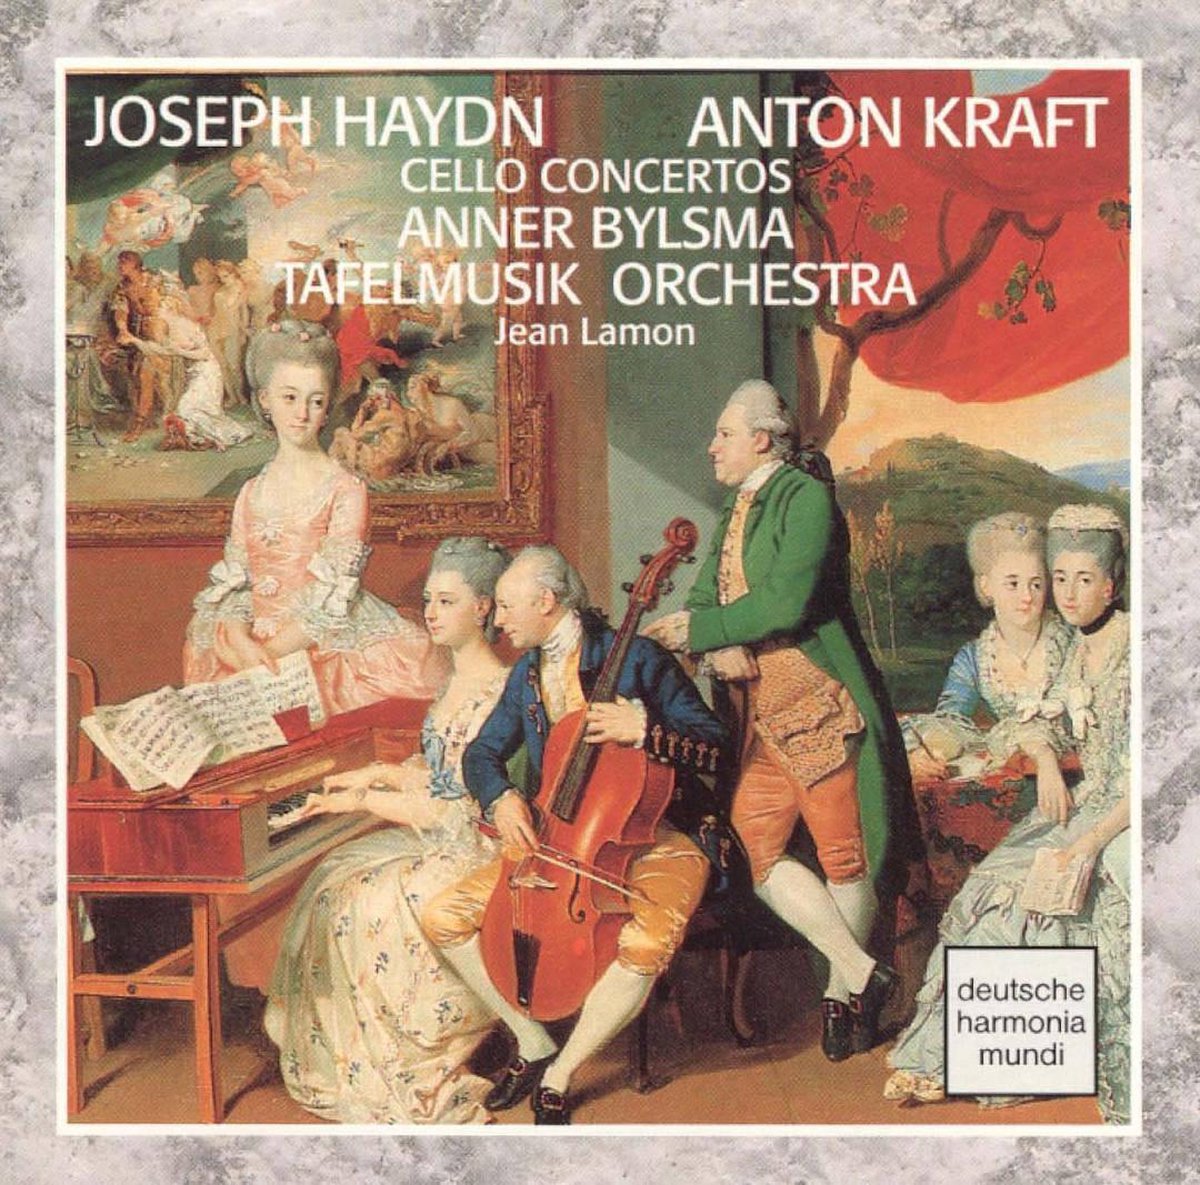 Haydn & Kraft: Cello Concertos - Anner Bylsma / Jeanne Lamon